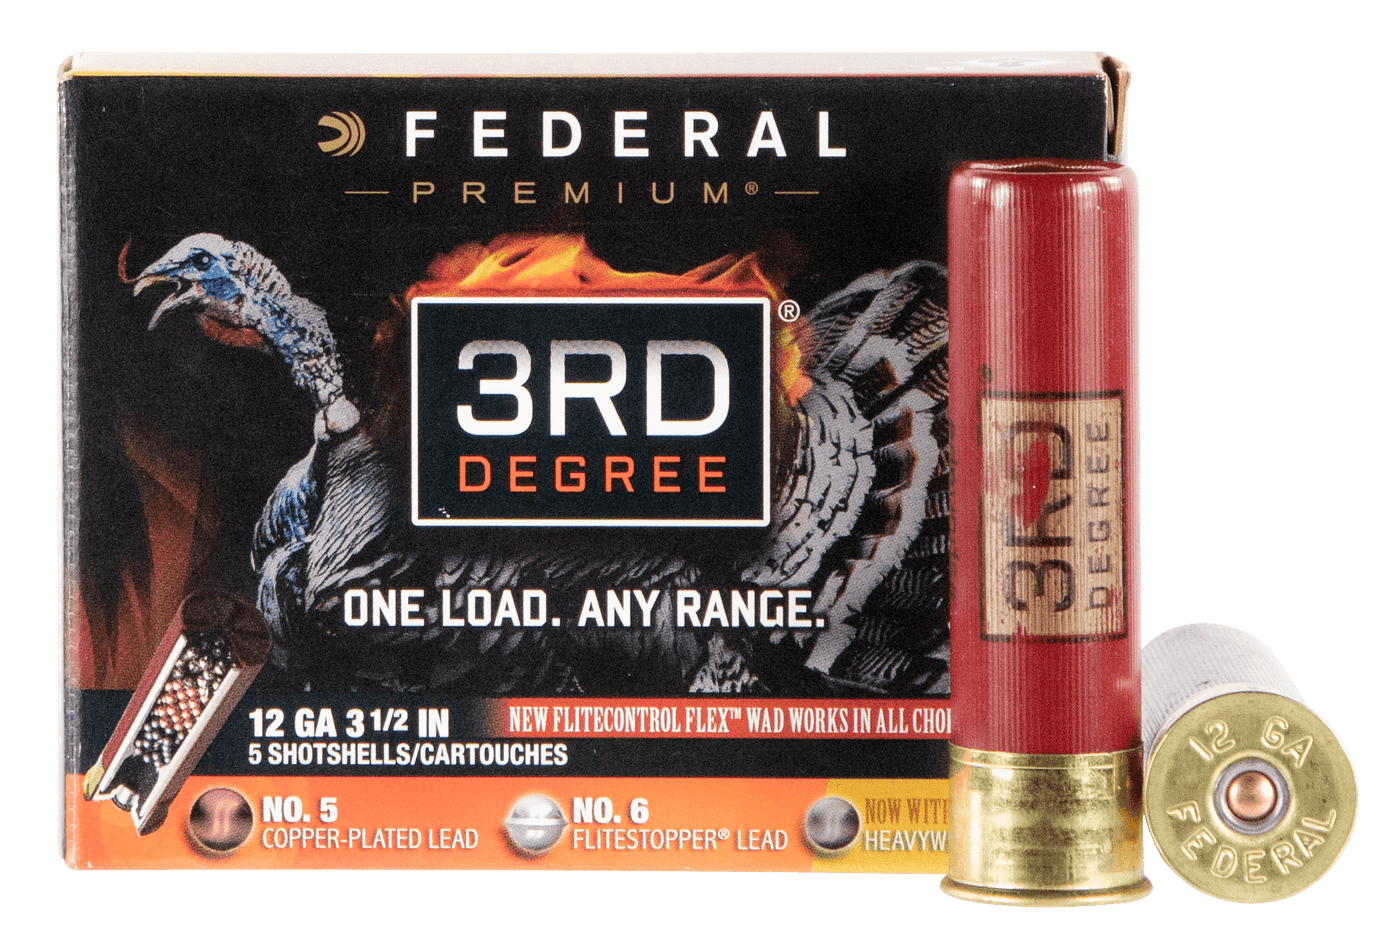 Federal Federal Premium Turkey Third Degree Shotgun Ammo 12 Ga. 3.5 In. 2 Oz. 5,6,7 Shot 5 Rd. Ammo